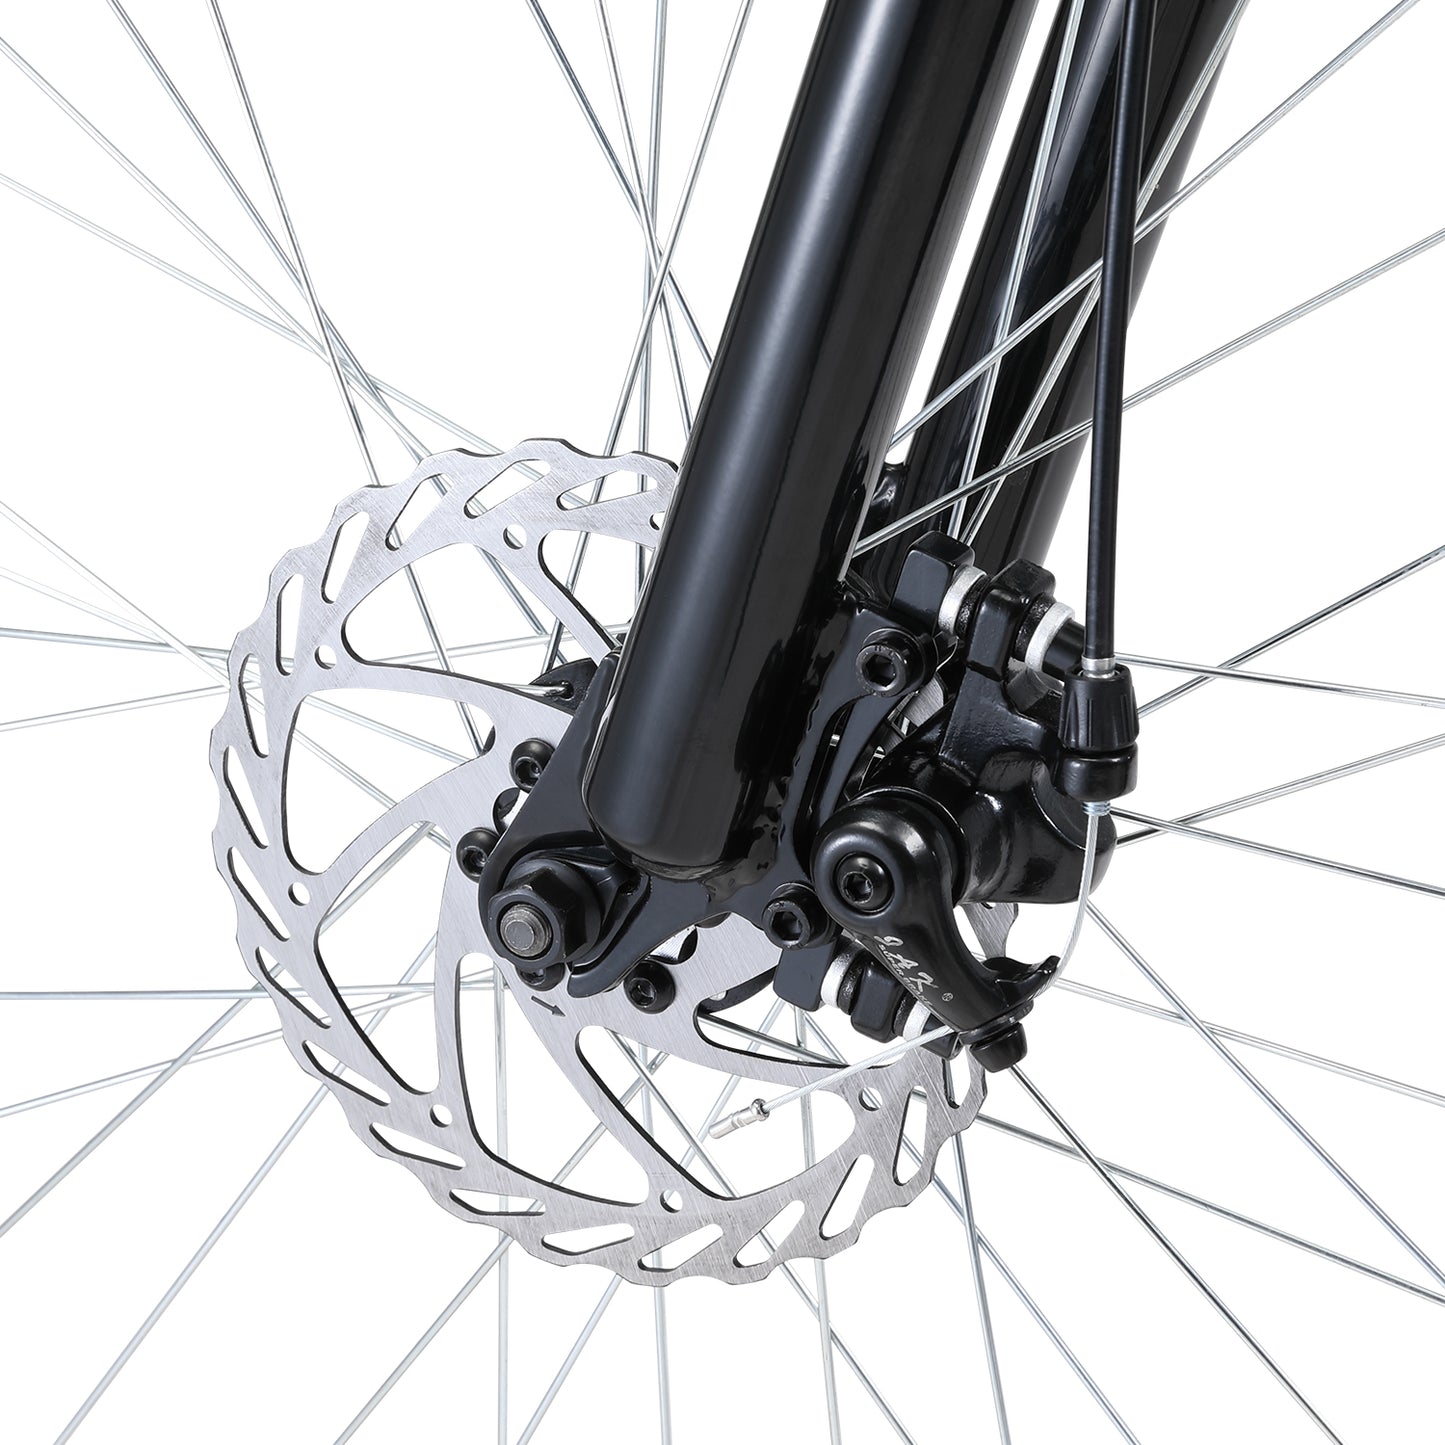 Progear Bikes ROVER Folding MTB 26" in Black